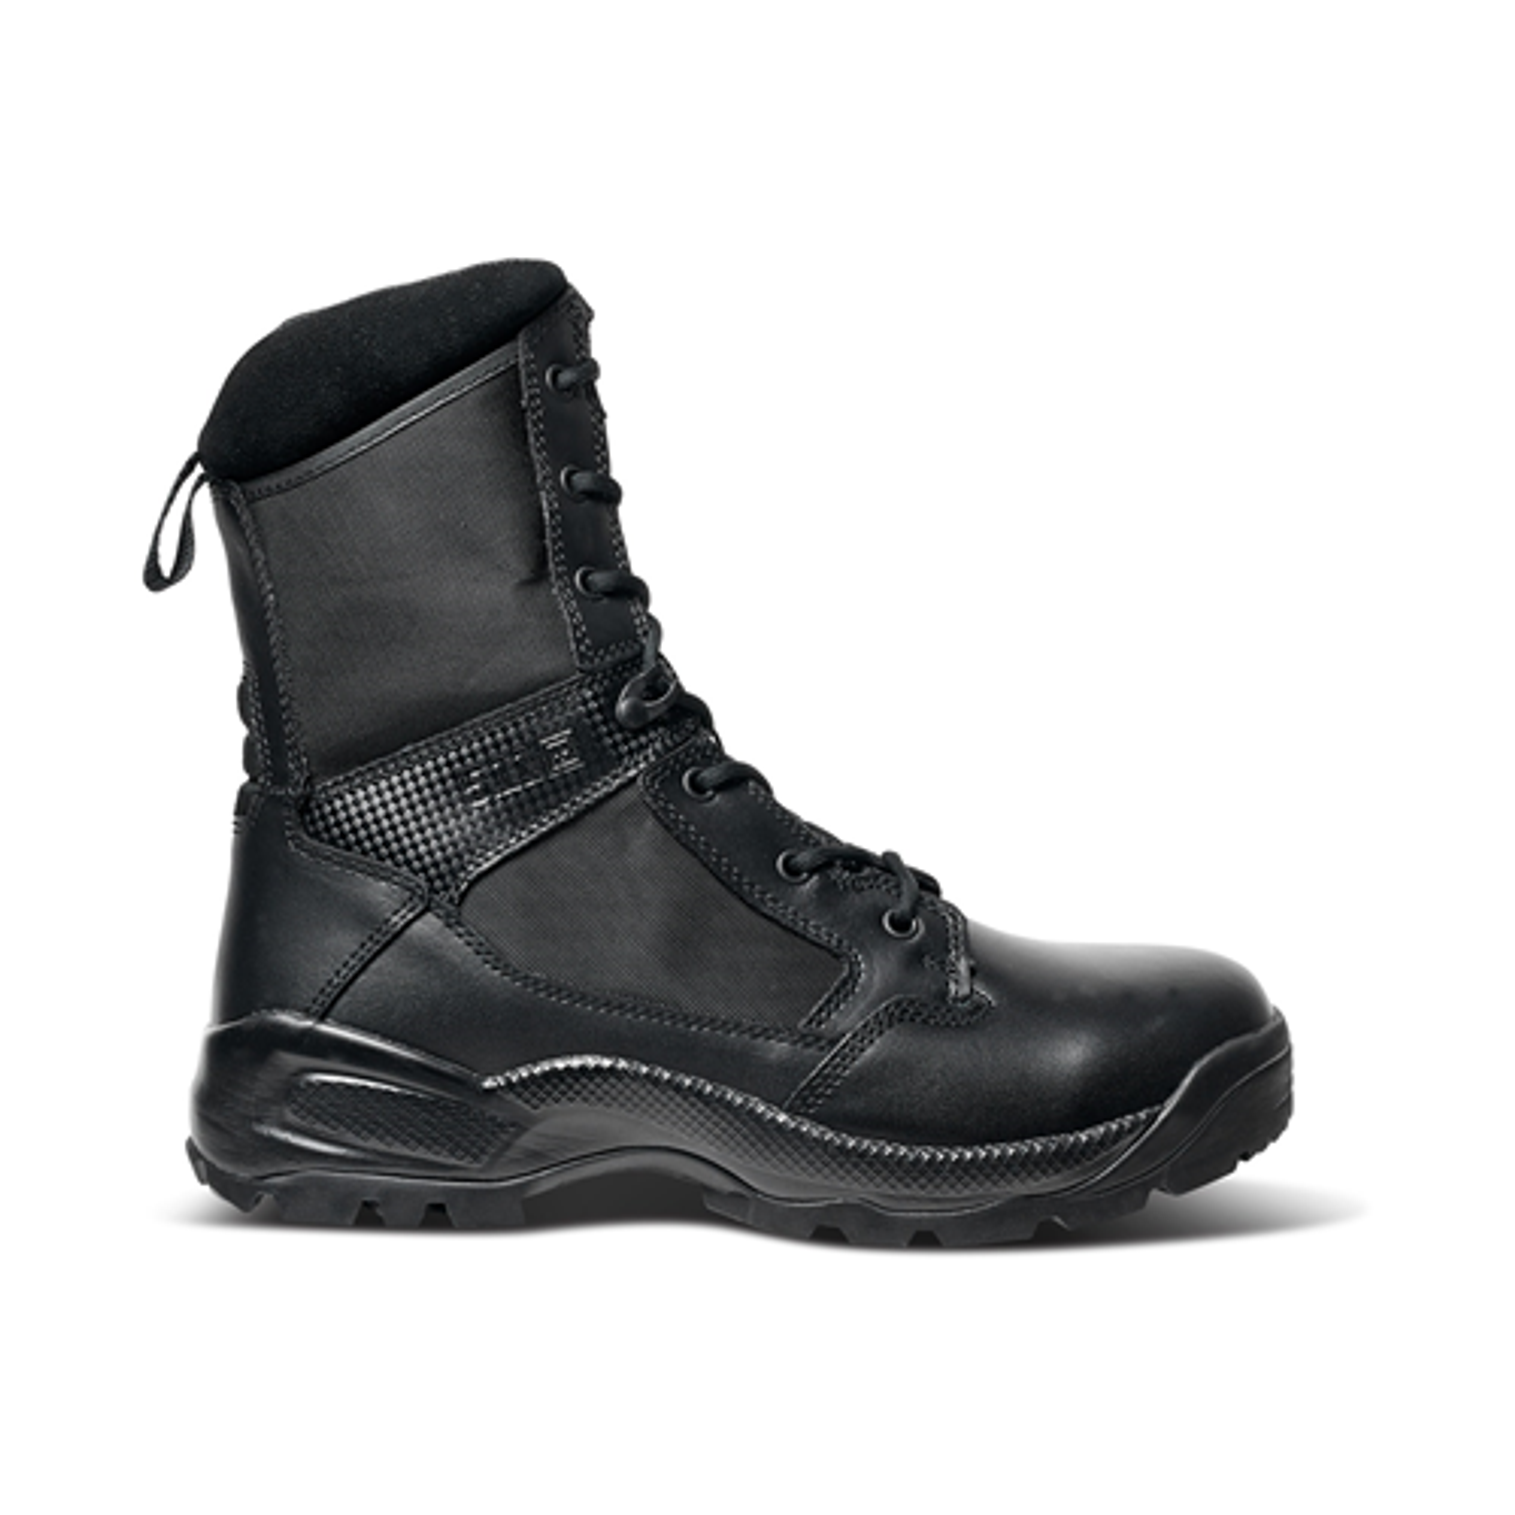 A.t.a.c. 2.0 Size Zip 8 Boots - KR5-123910198W